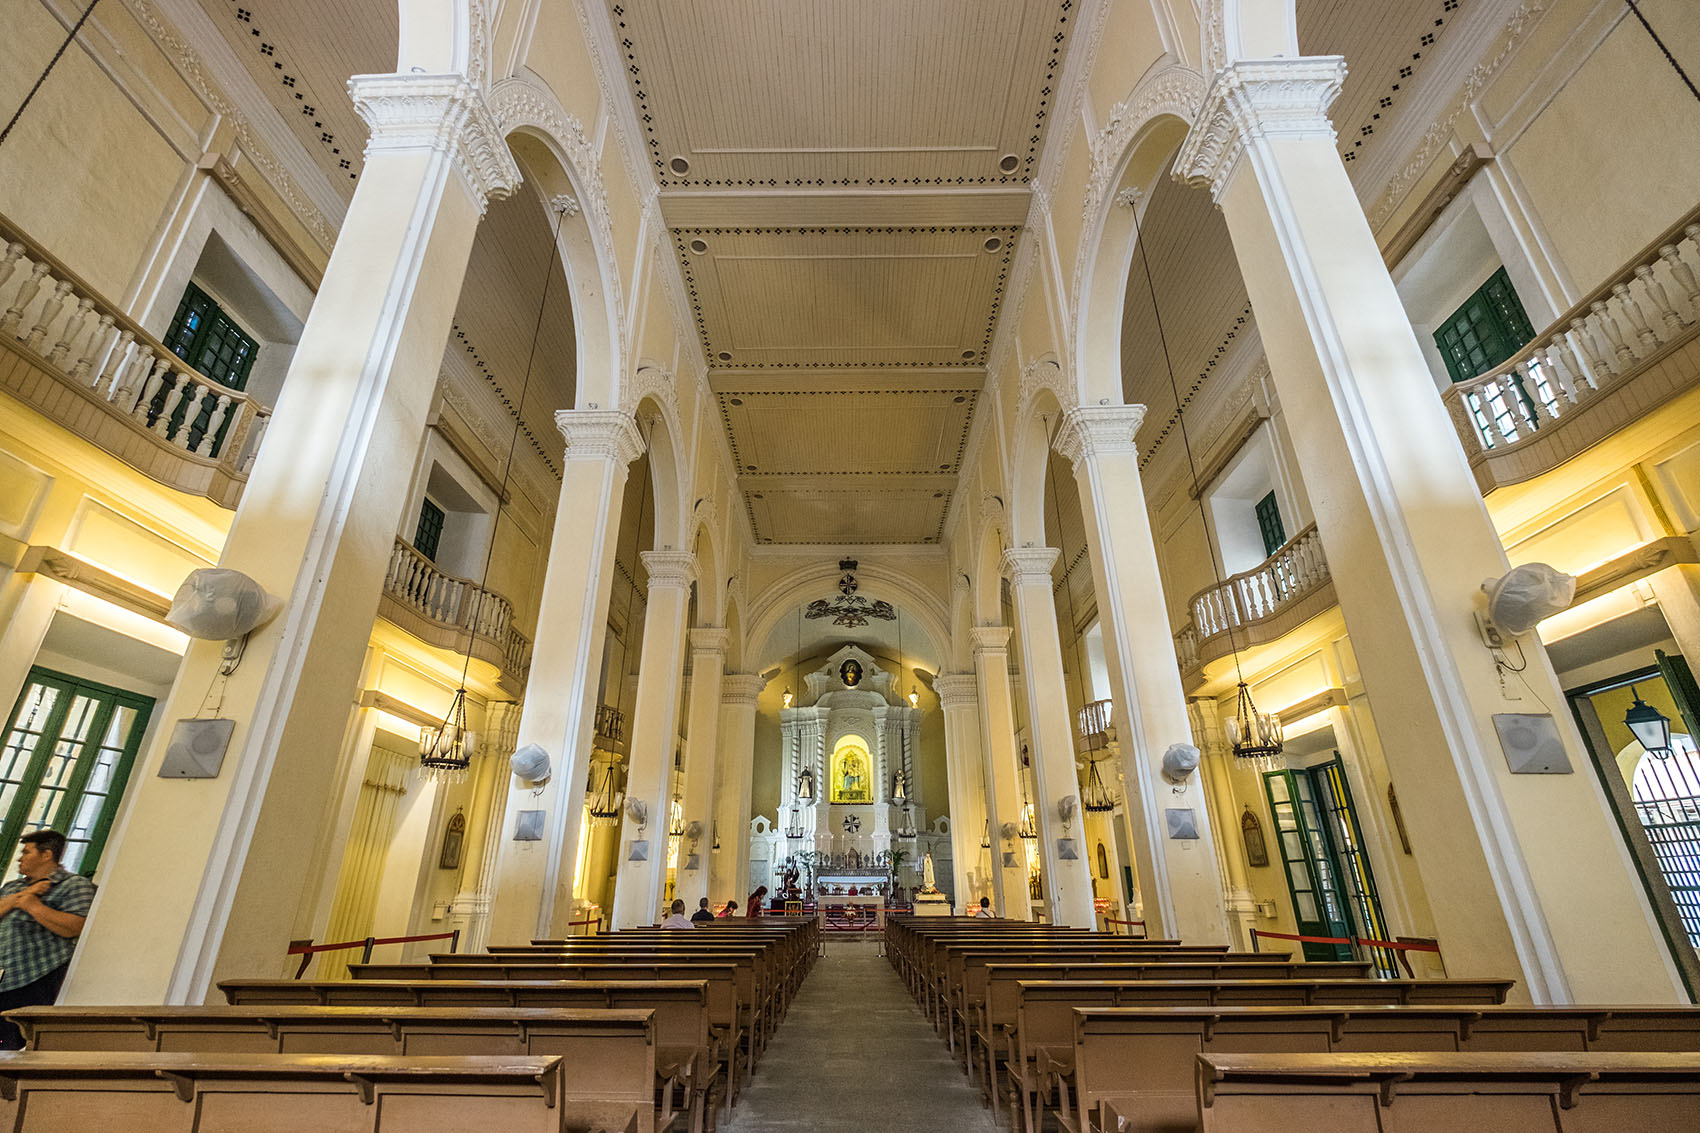 St. Dominic's Church: Interior